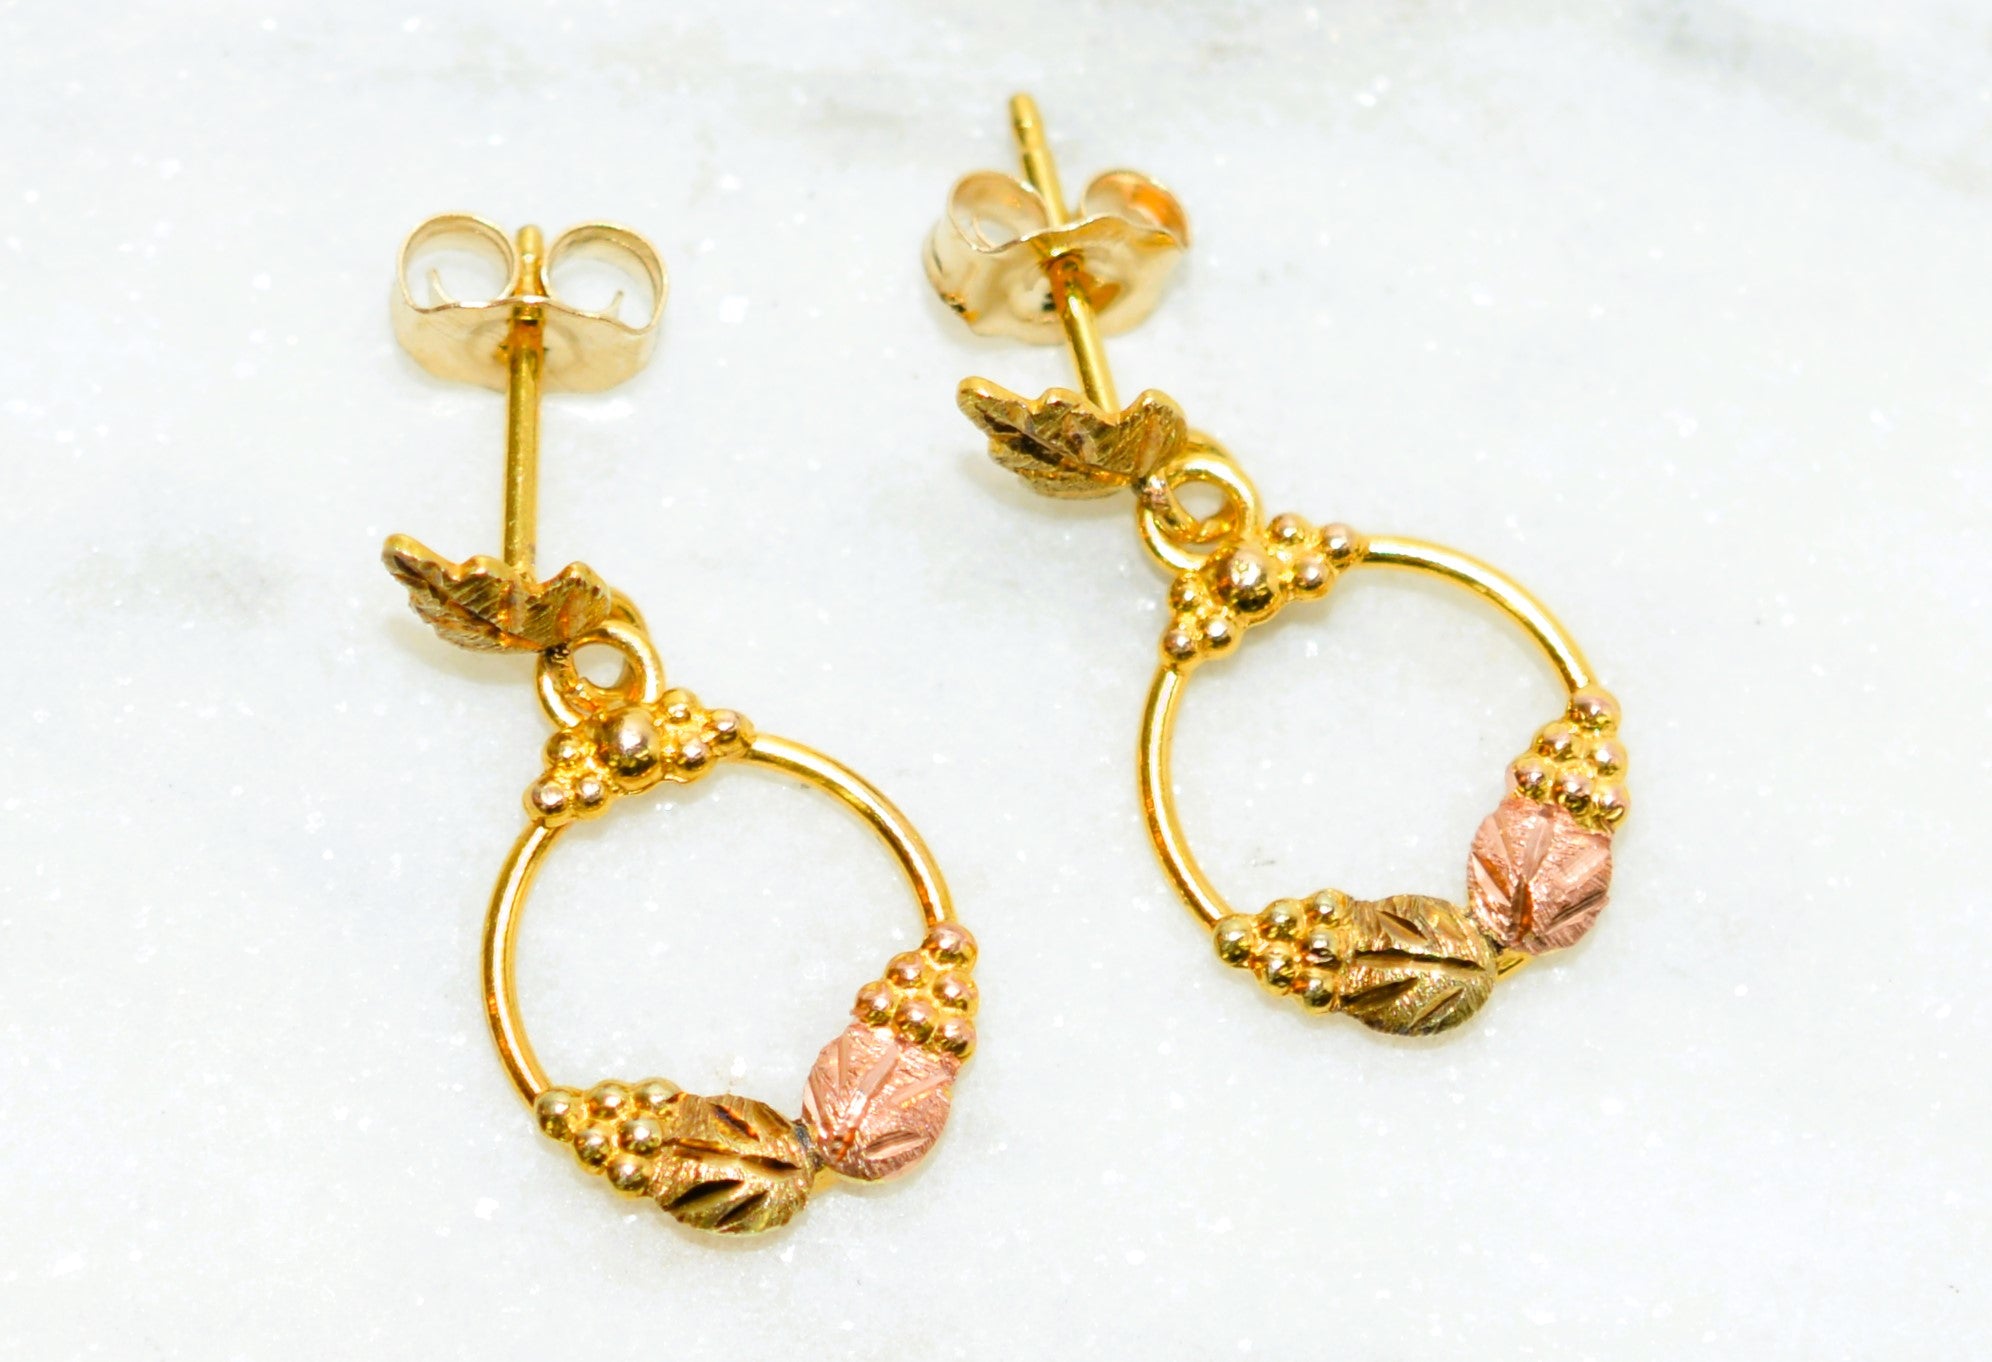 Black Hills Gold Earrings 10K Solid Gold Grape Leaf Earrings Tri-Color Gold Earrings South Dakota Dangle Drop Earrings Vintage American USA